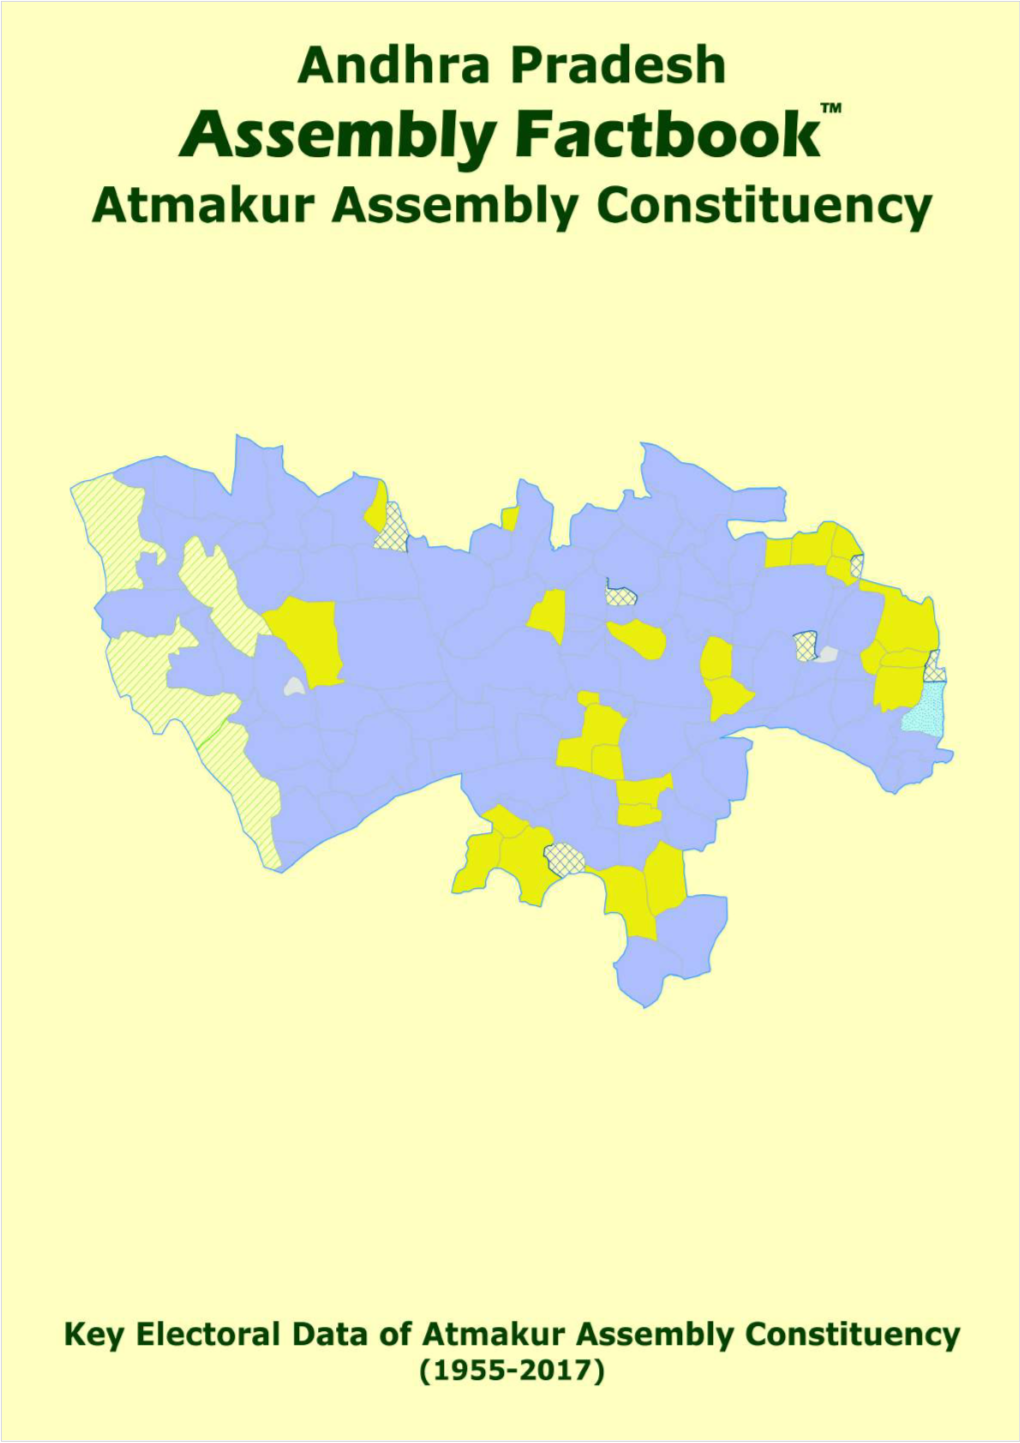 Atmakur Assembly Andhra Pradesh Factbook